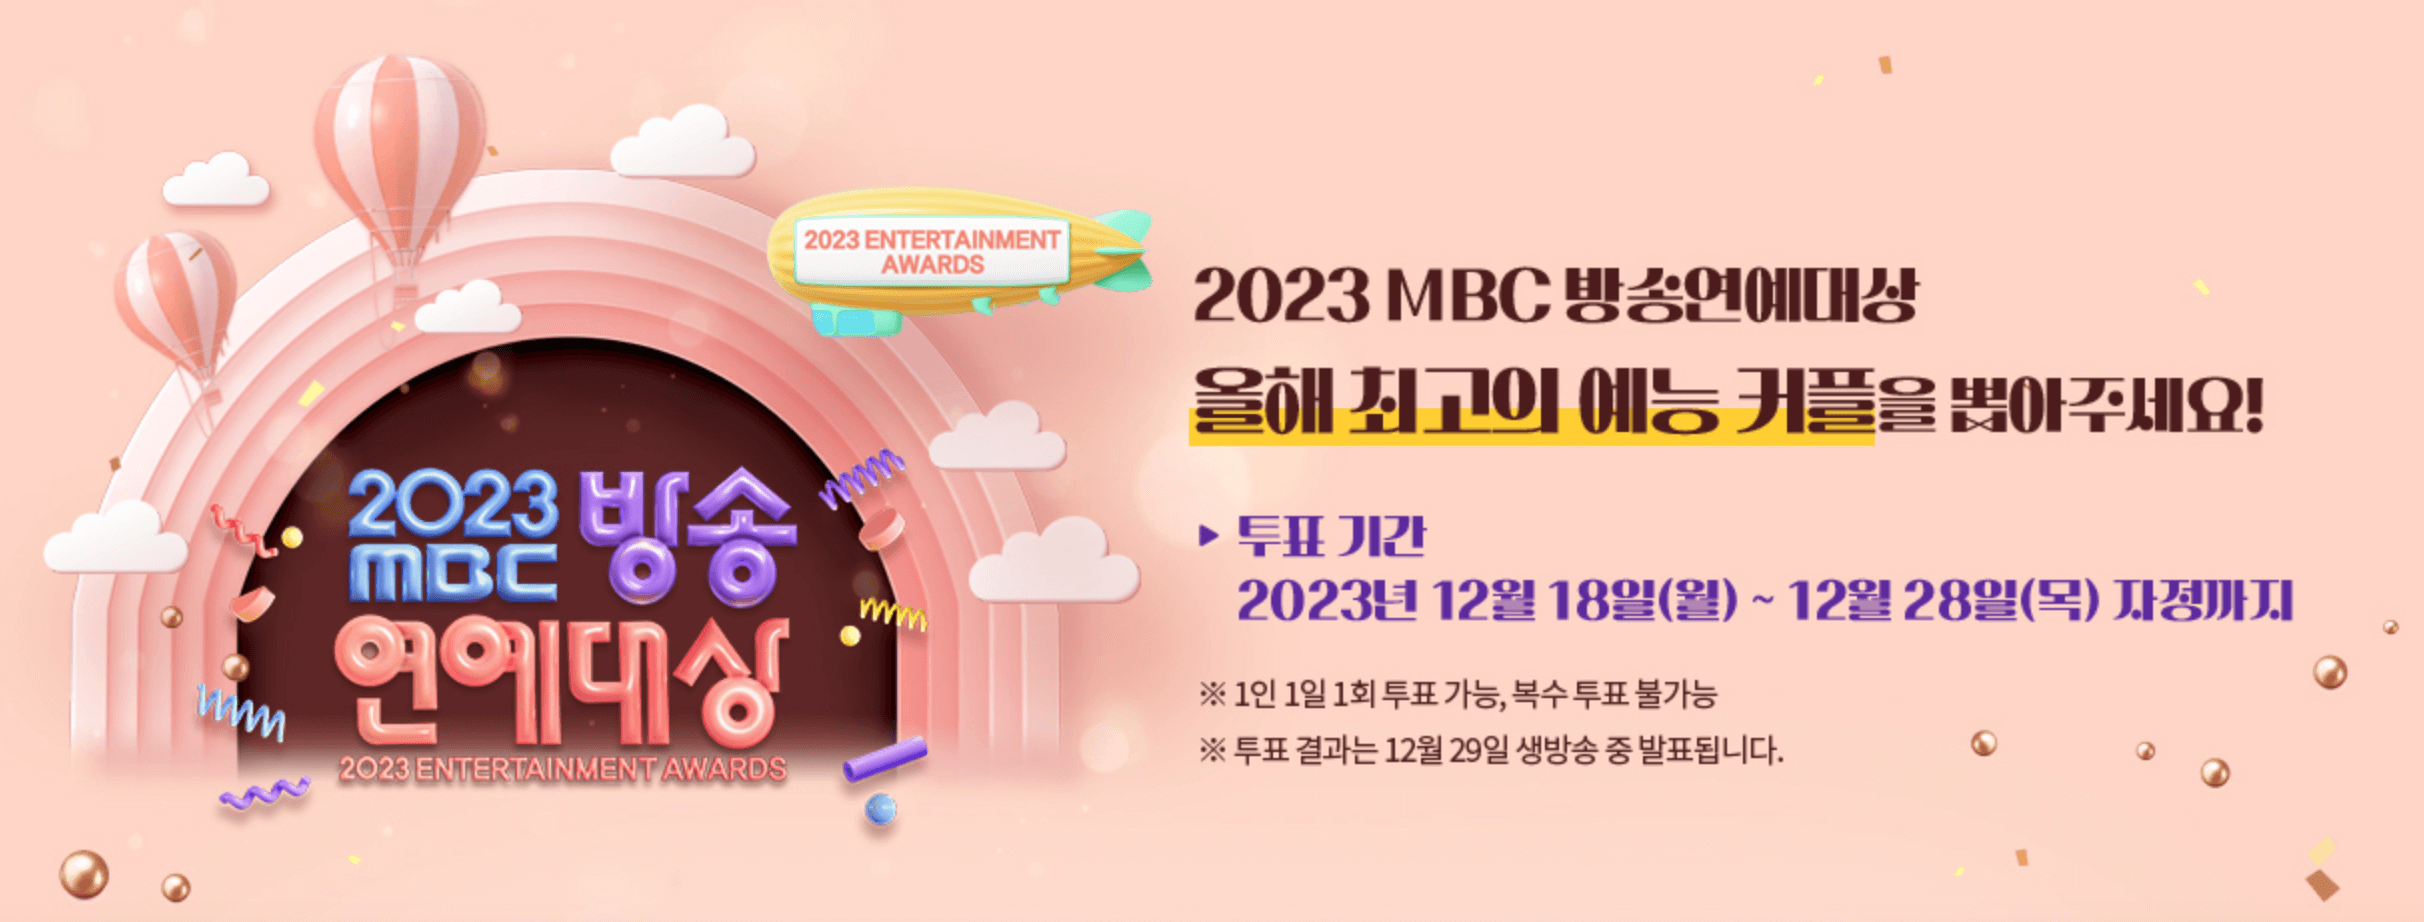 2023mbc방송연예대상베스트커플상후보